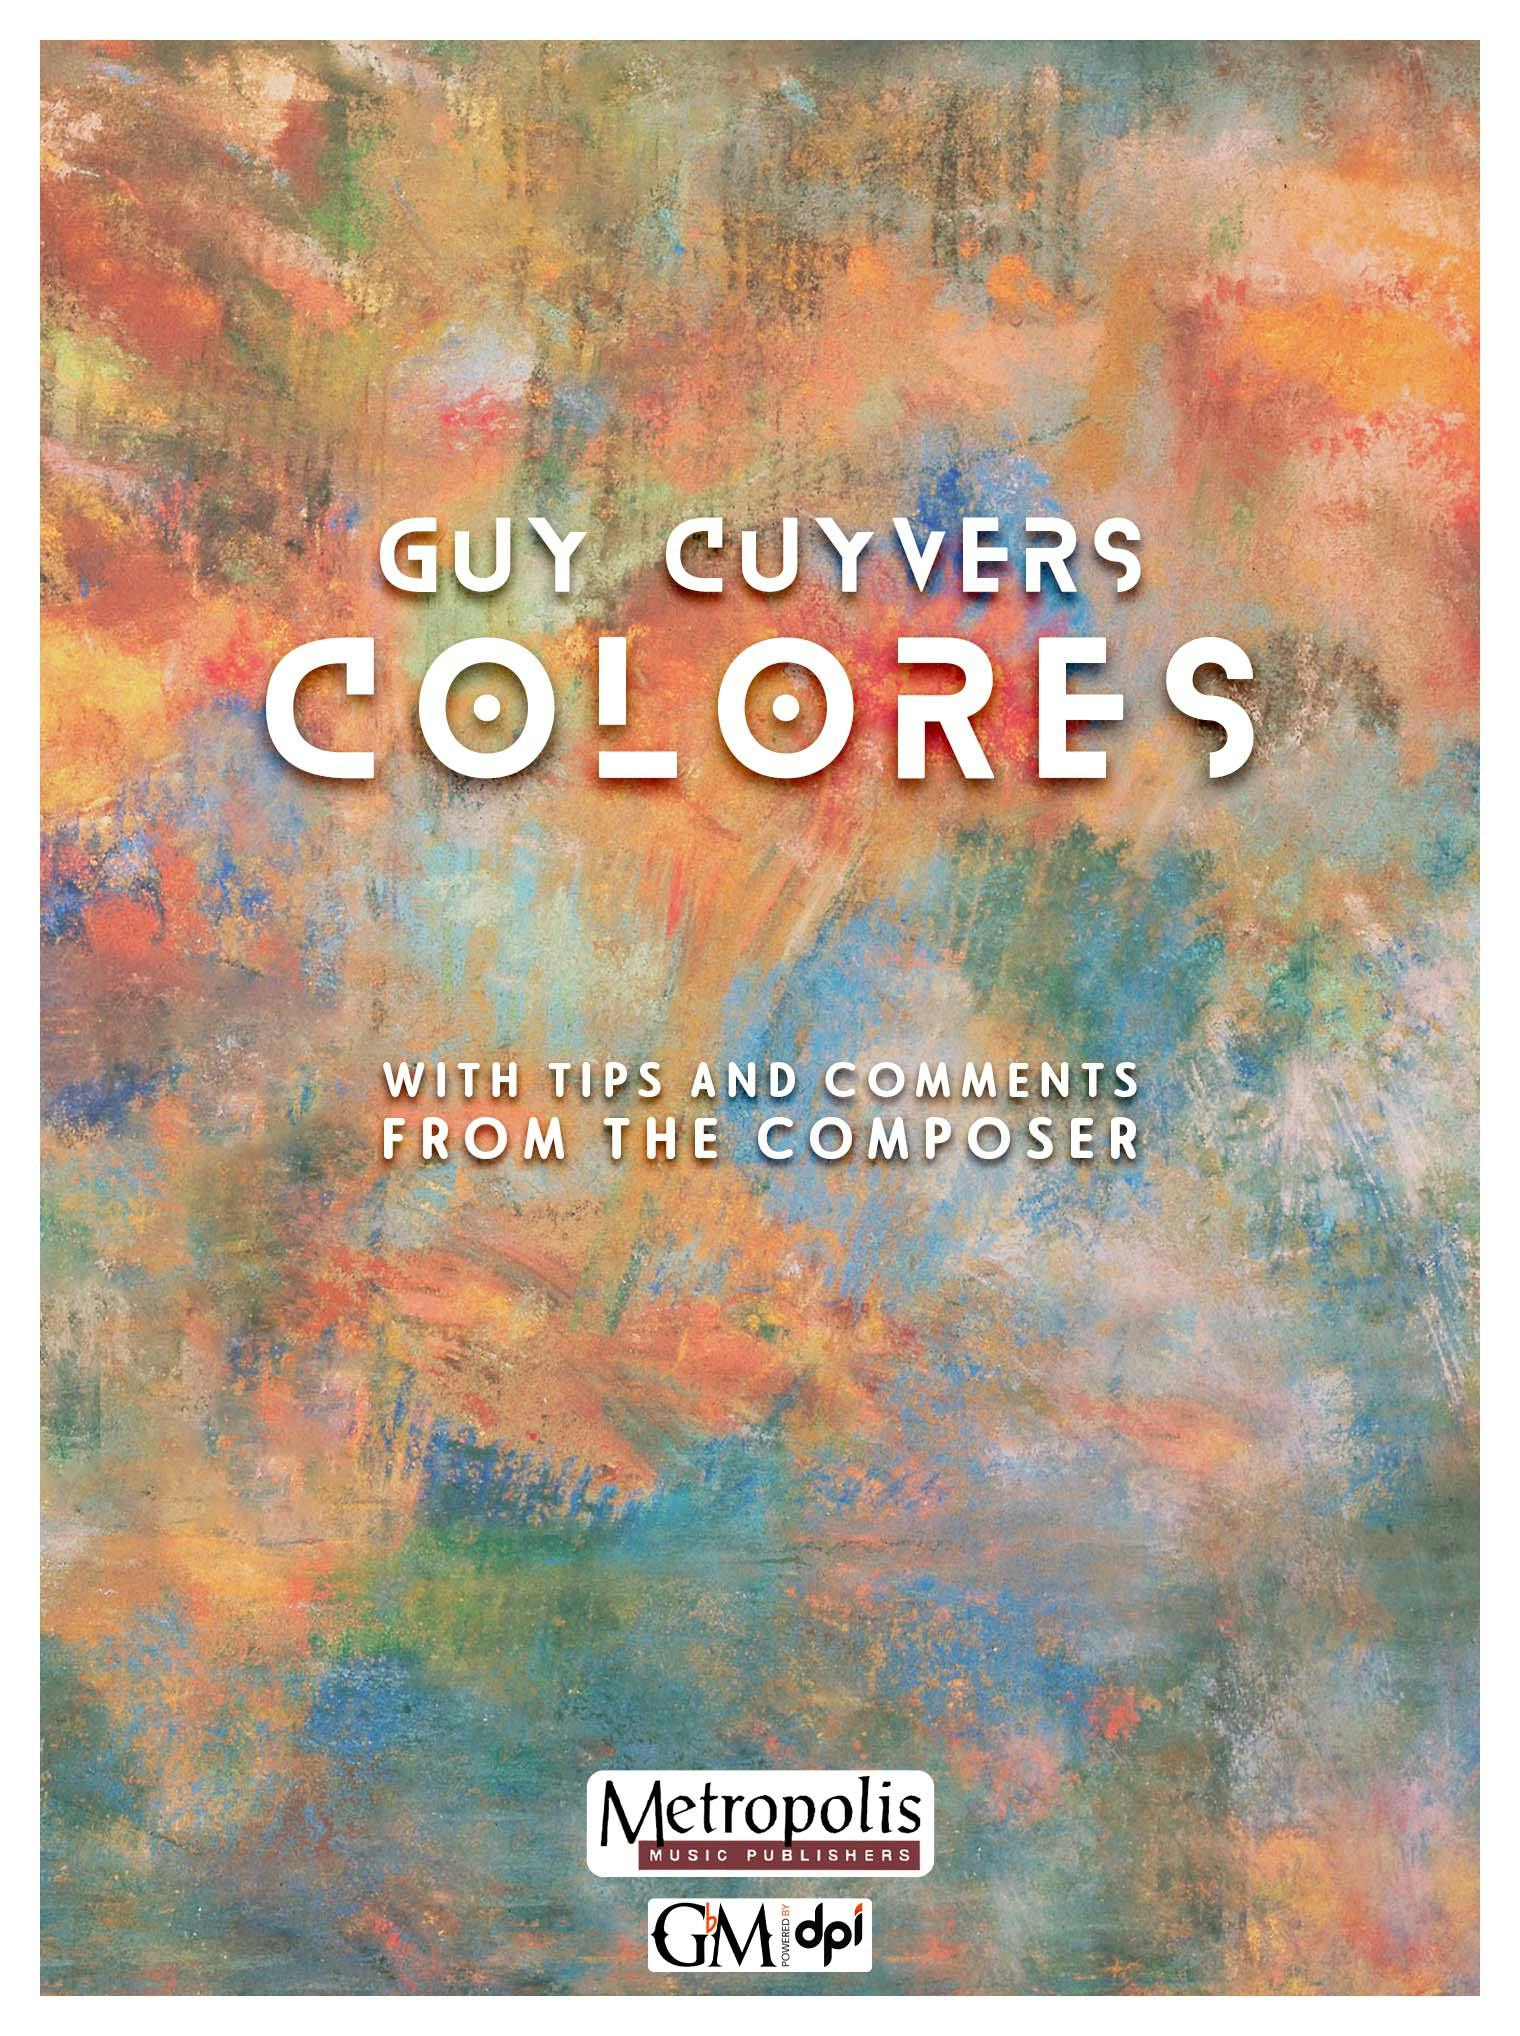 Colores cover